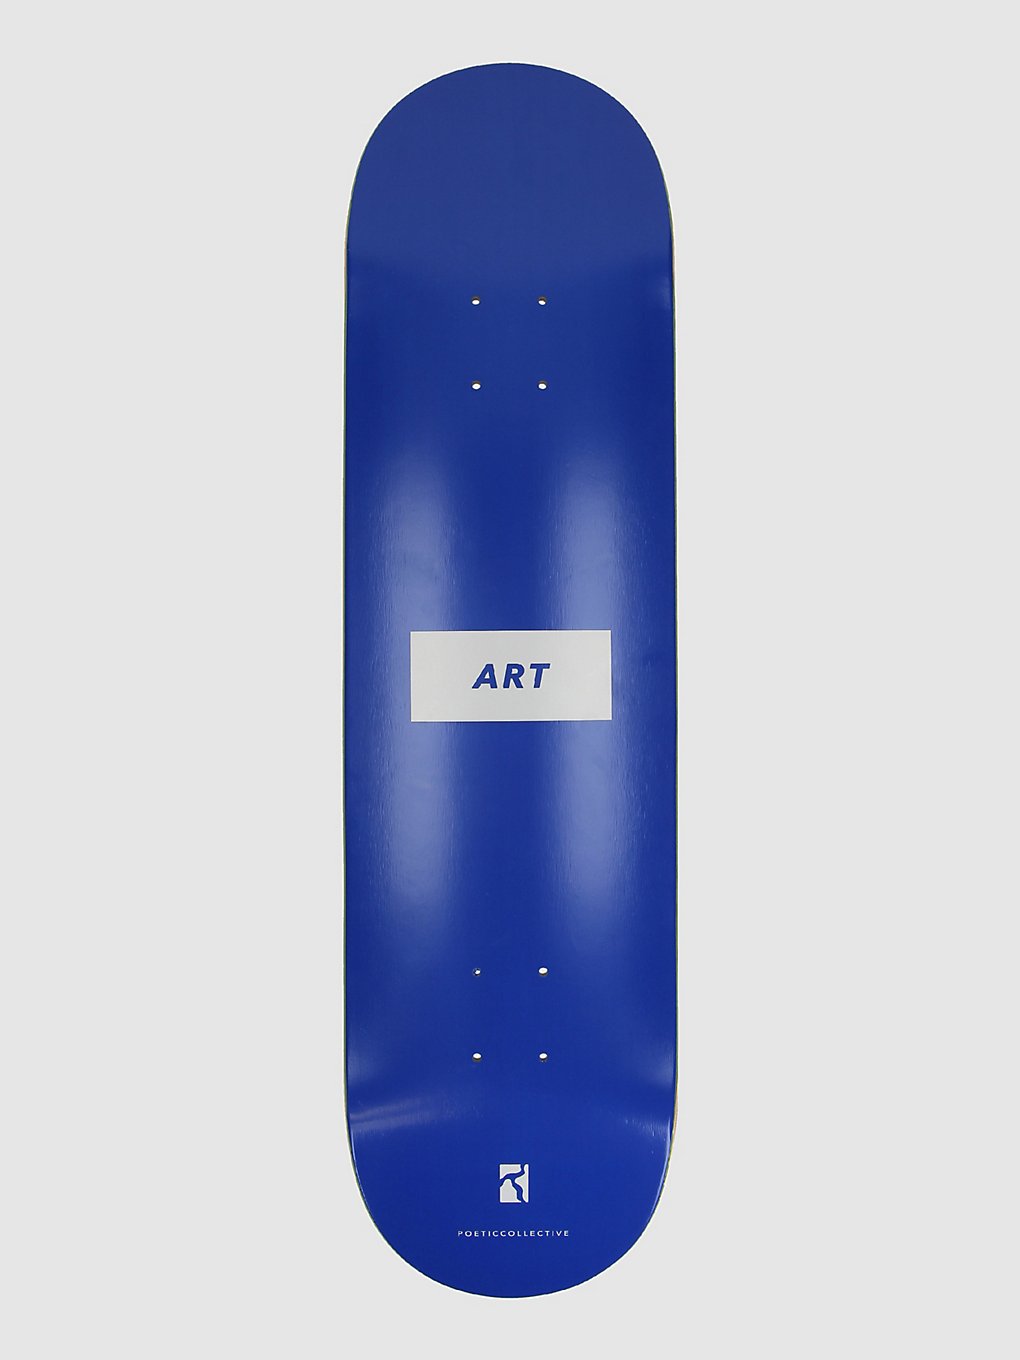 Poetic Collective Art 8.25" Skateboard Deck blue kaufen